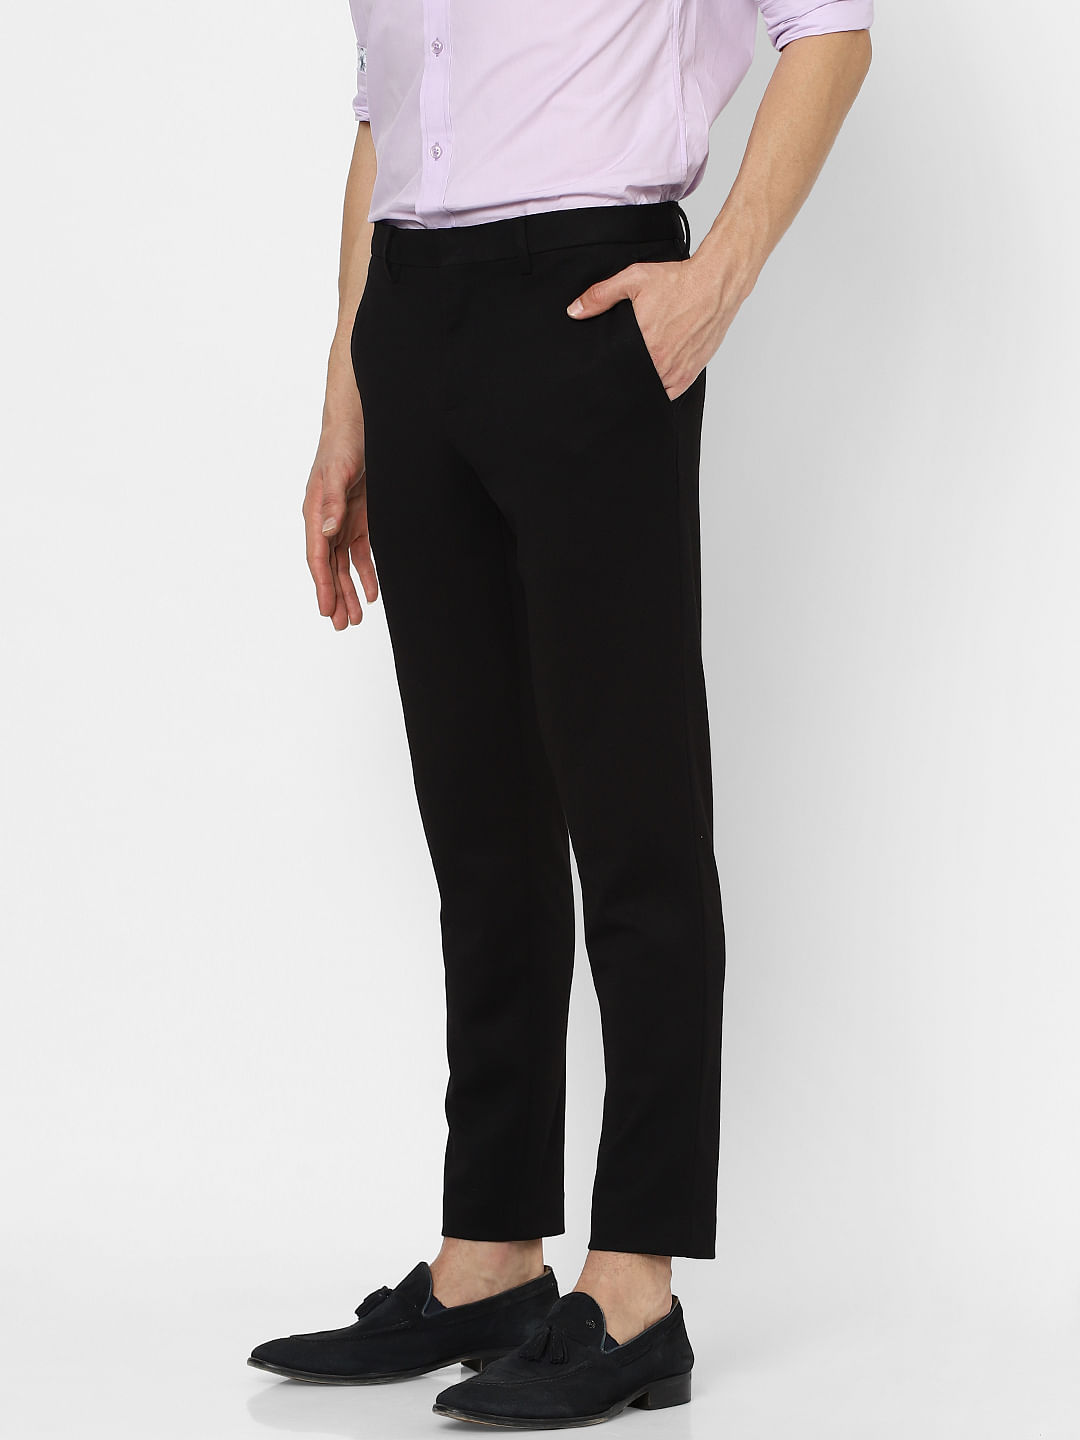 Buy minimalist Everyday Trousers from your sustainable fashion store i   Zeruri Clothing